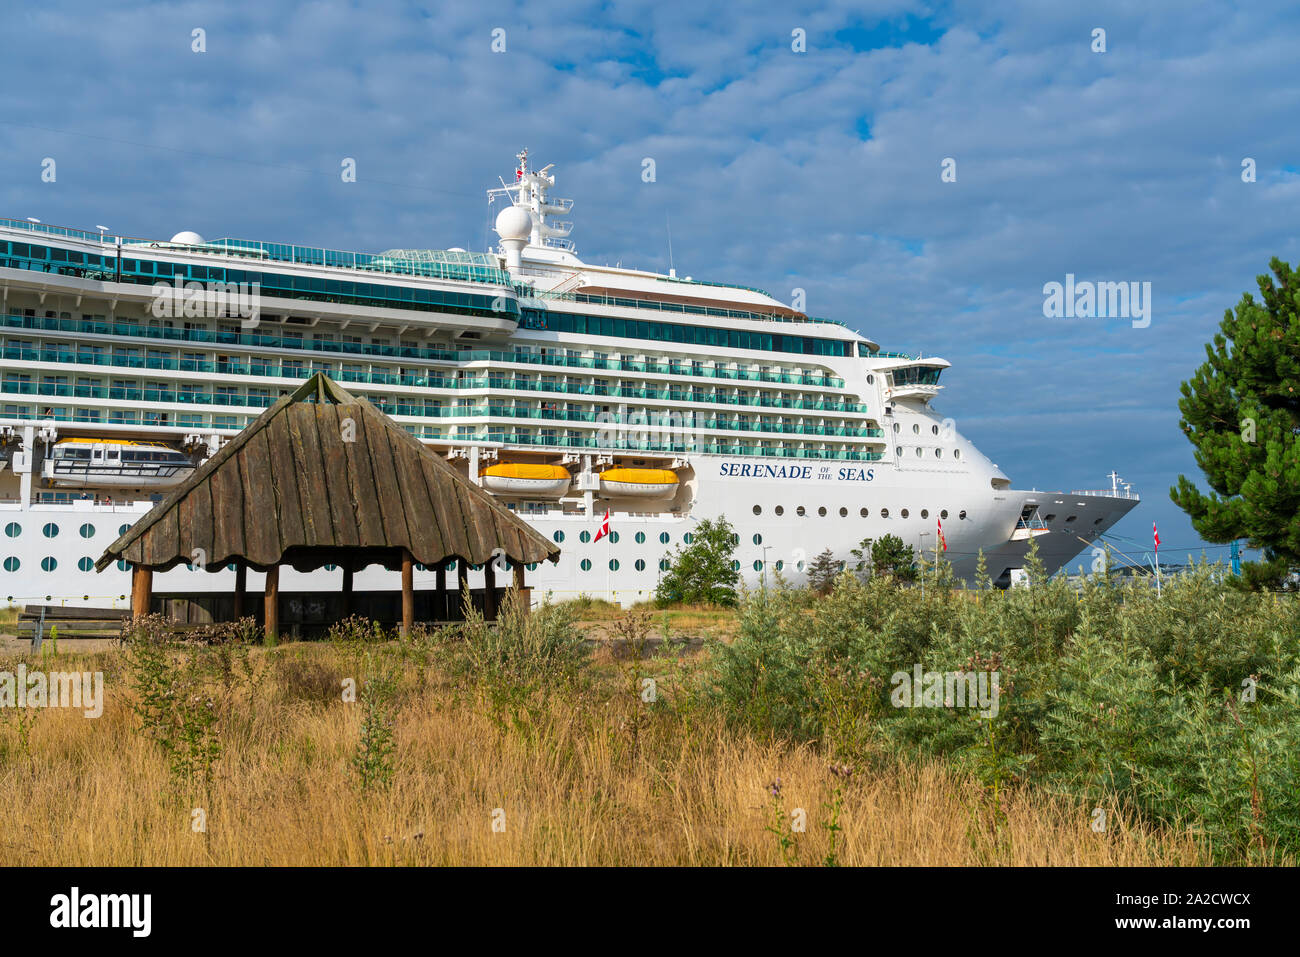 The cruise ship Serenade of the Seas in port at Fredericia, Denmark. Stock Photo